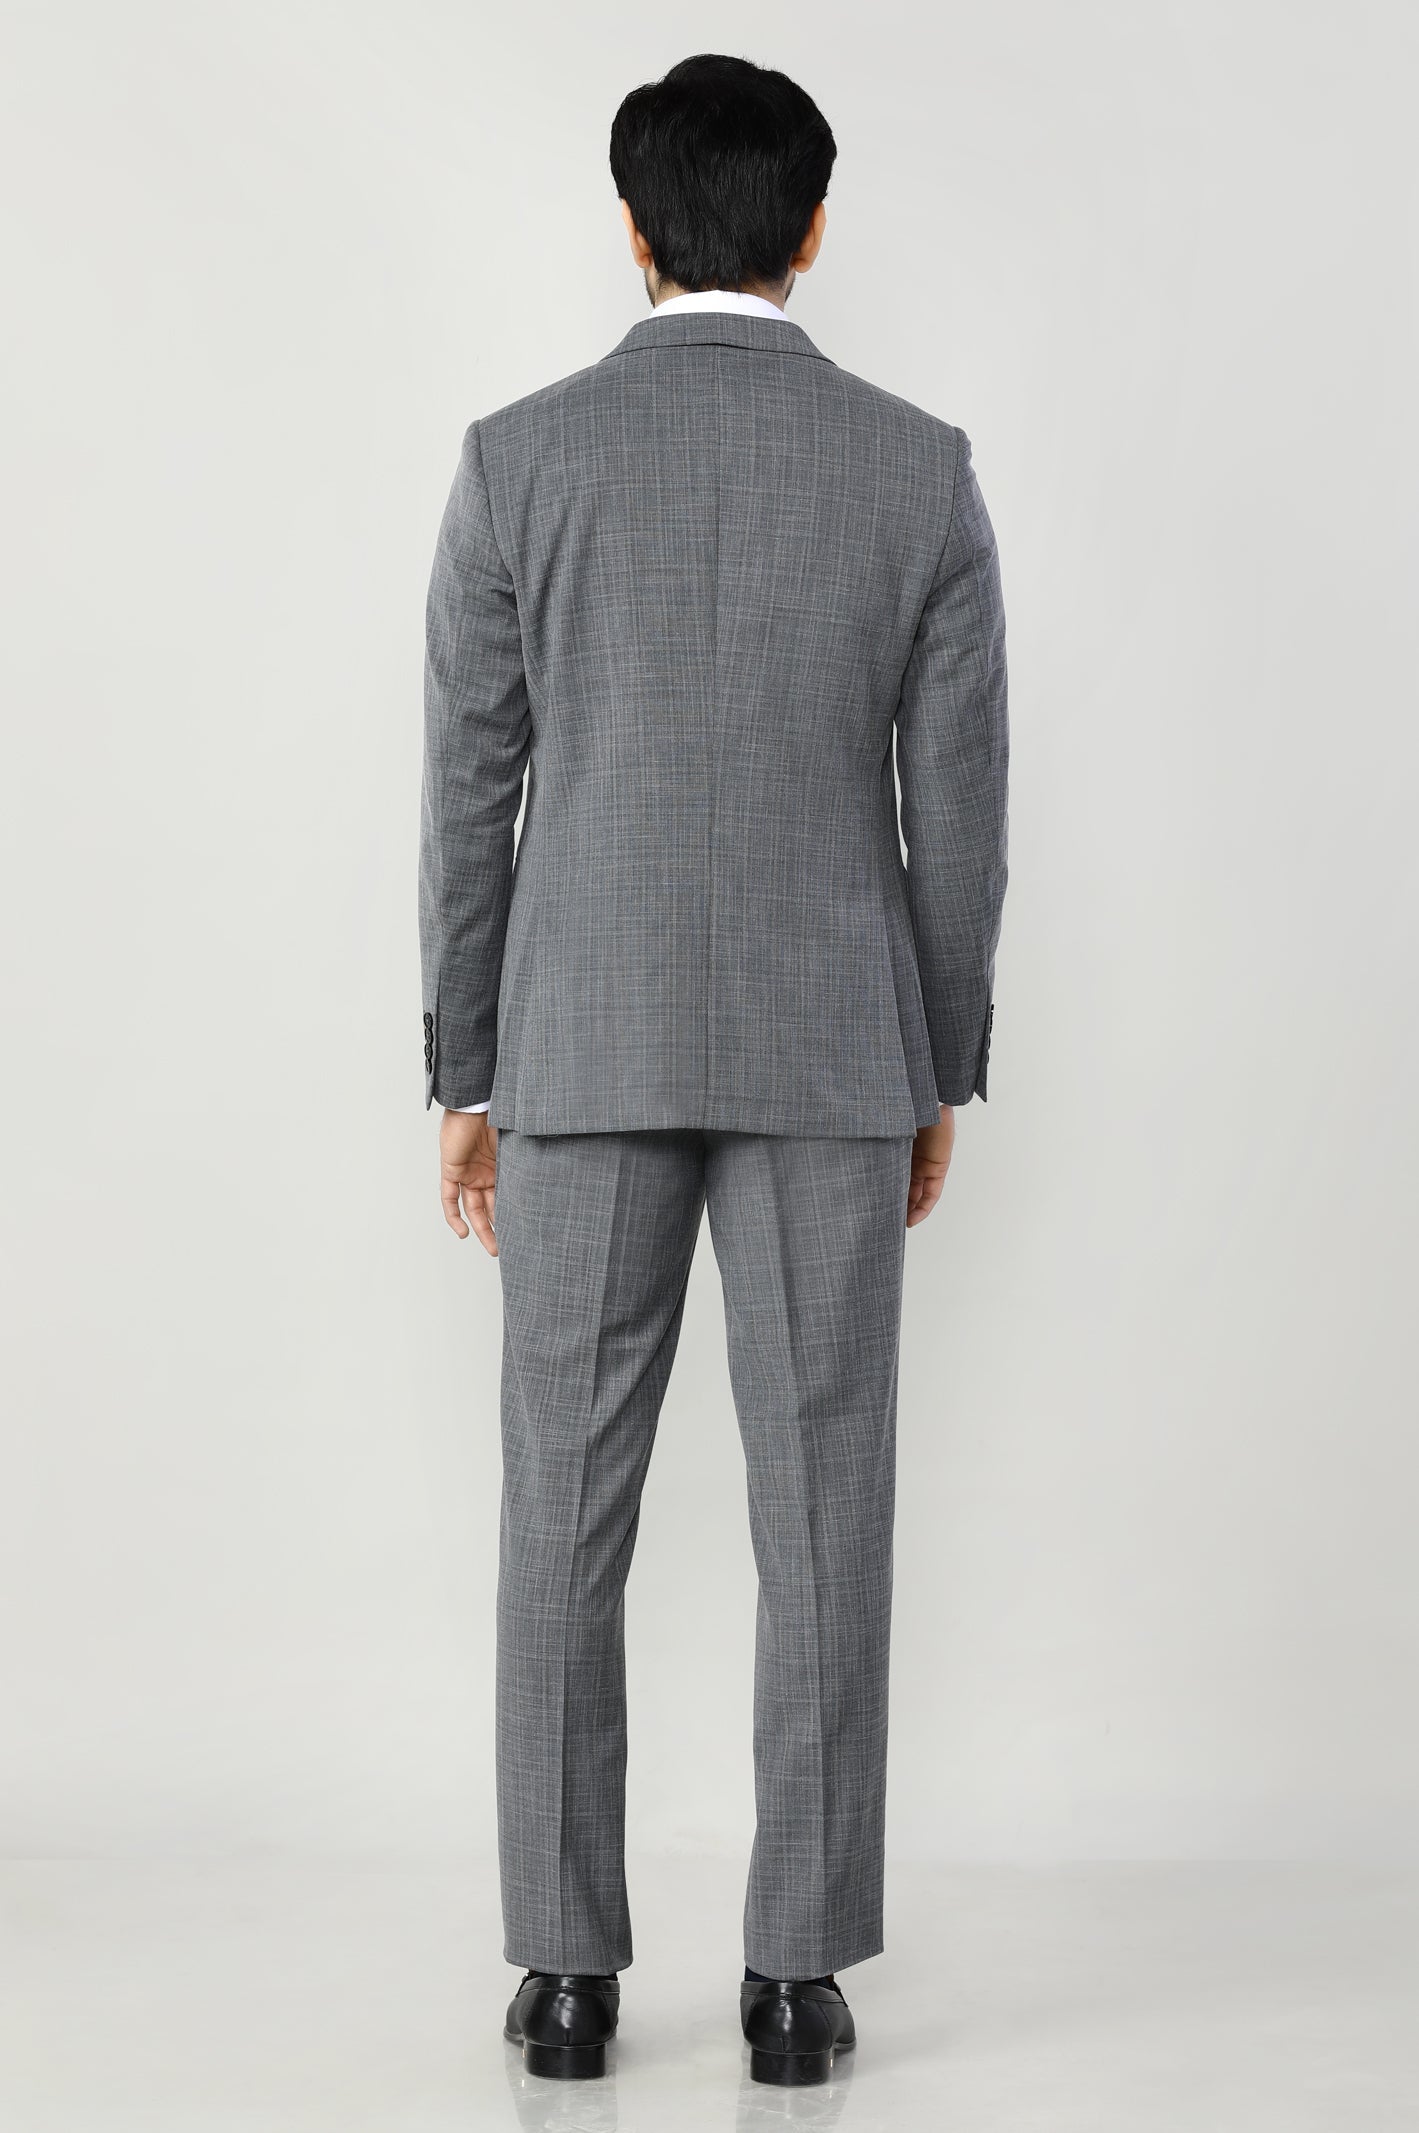 3 Piece Grey Check Suit for Men's